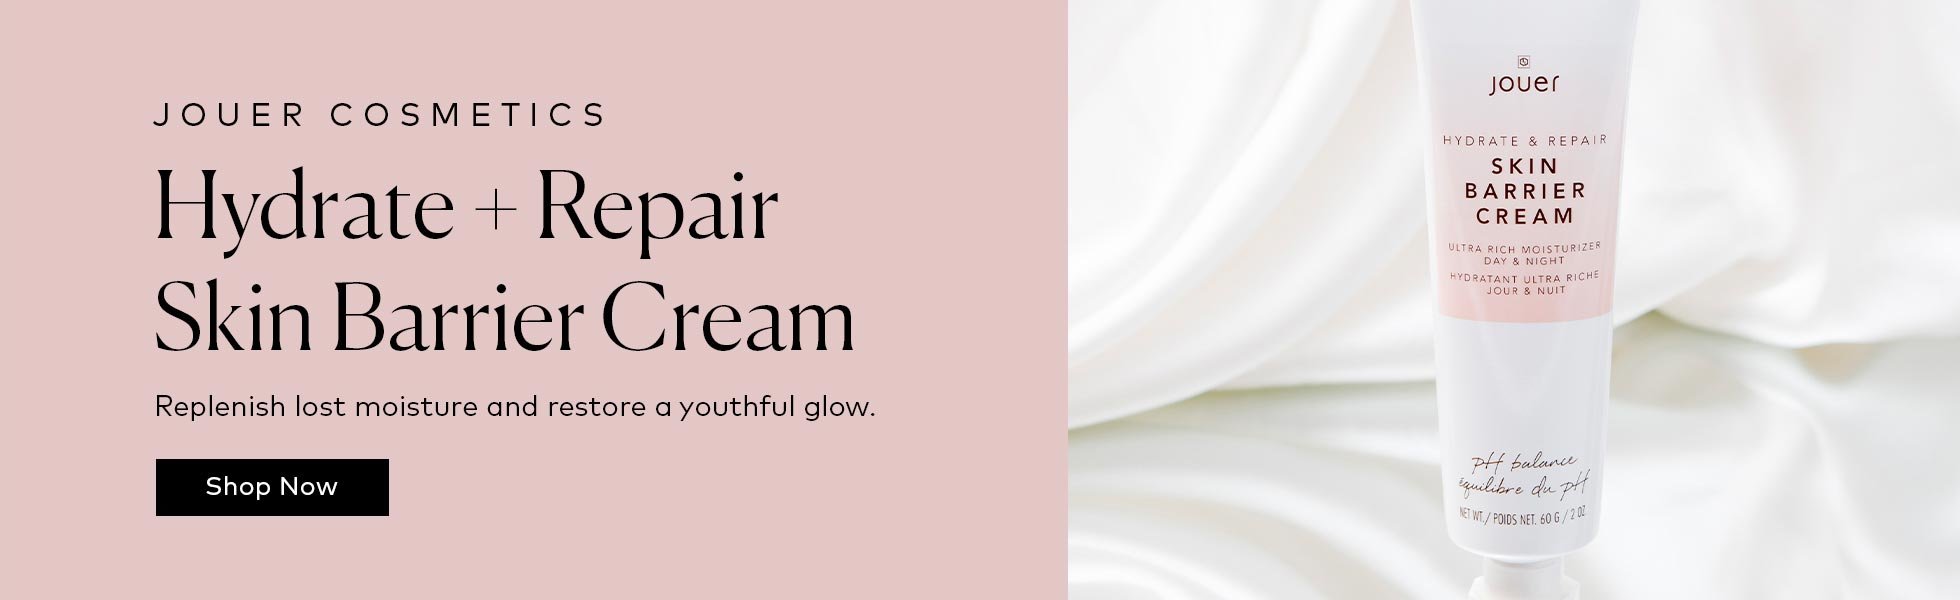 Shop the Jouer Cosmetics Hydrate + Repair Skin Barrier Cream on Beautylish.com